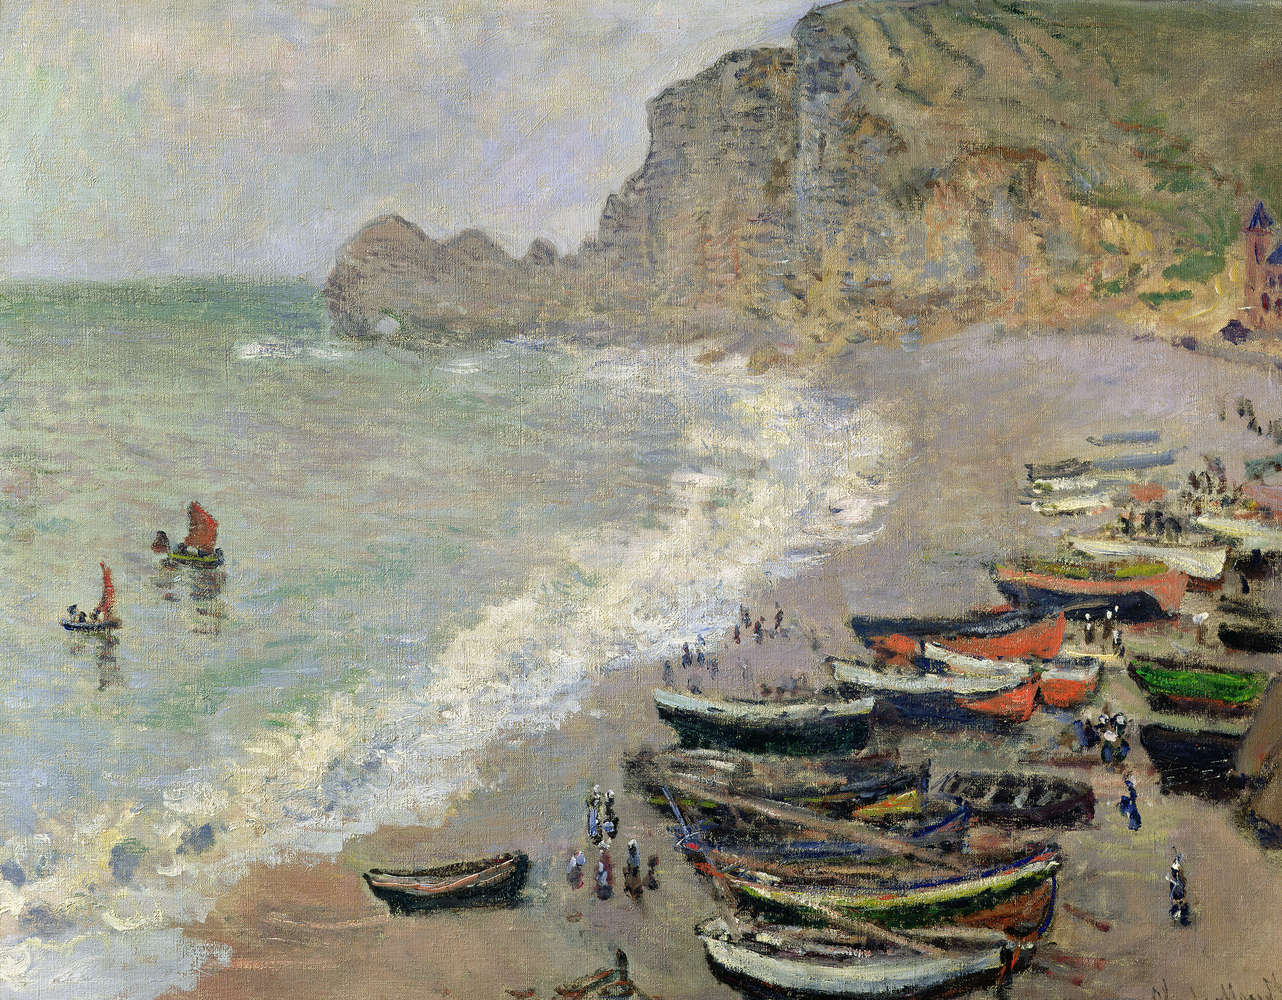             Mural "Etretat, la playa y la Puerta de Amont" de Claude Monet
        